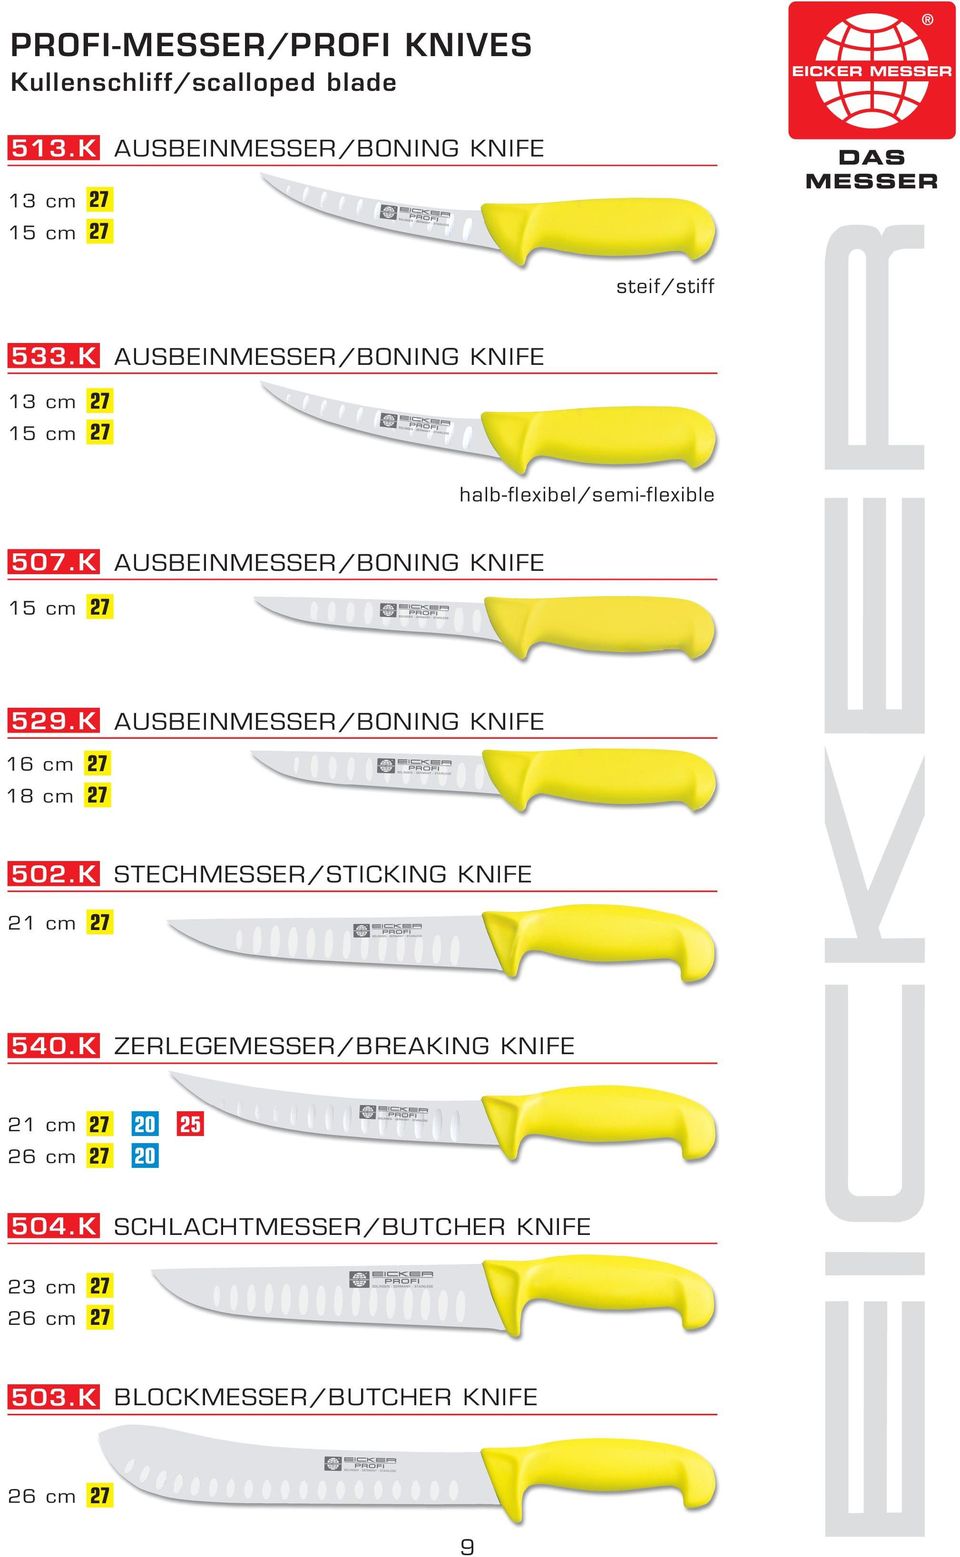 K AUSBEINMESSER/BONING KNIFE 13 cm 27 15 cm 27 halb-flexibel/semi-flexible 507.K AUSBEINMESSER/BONING KNIFE 15 cm 27 529.